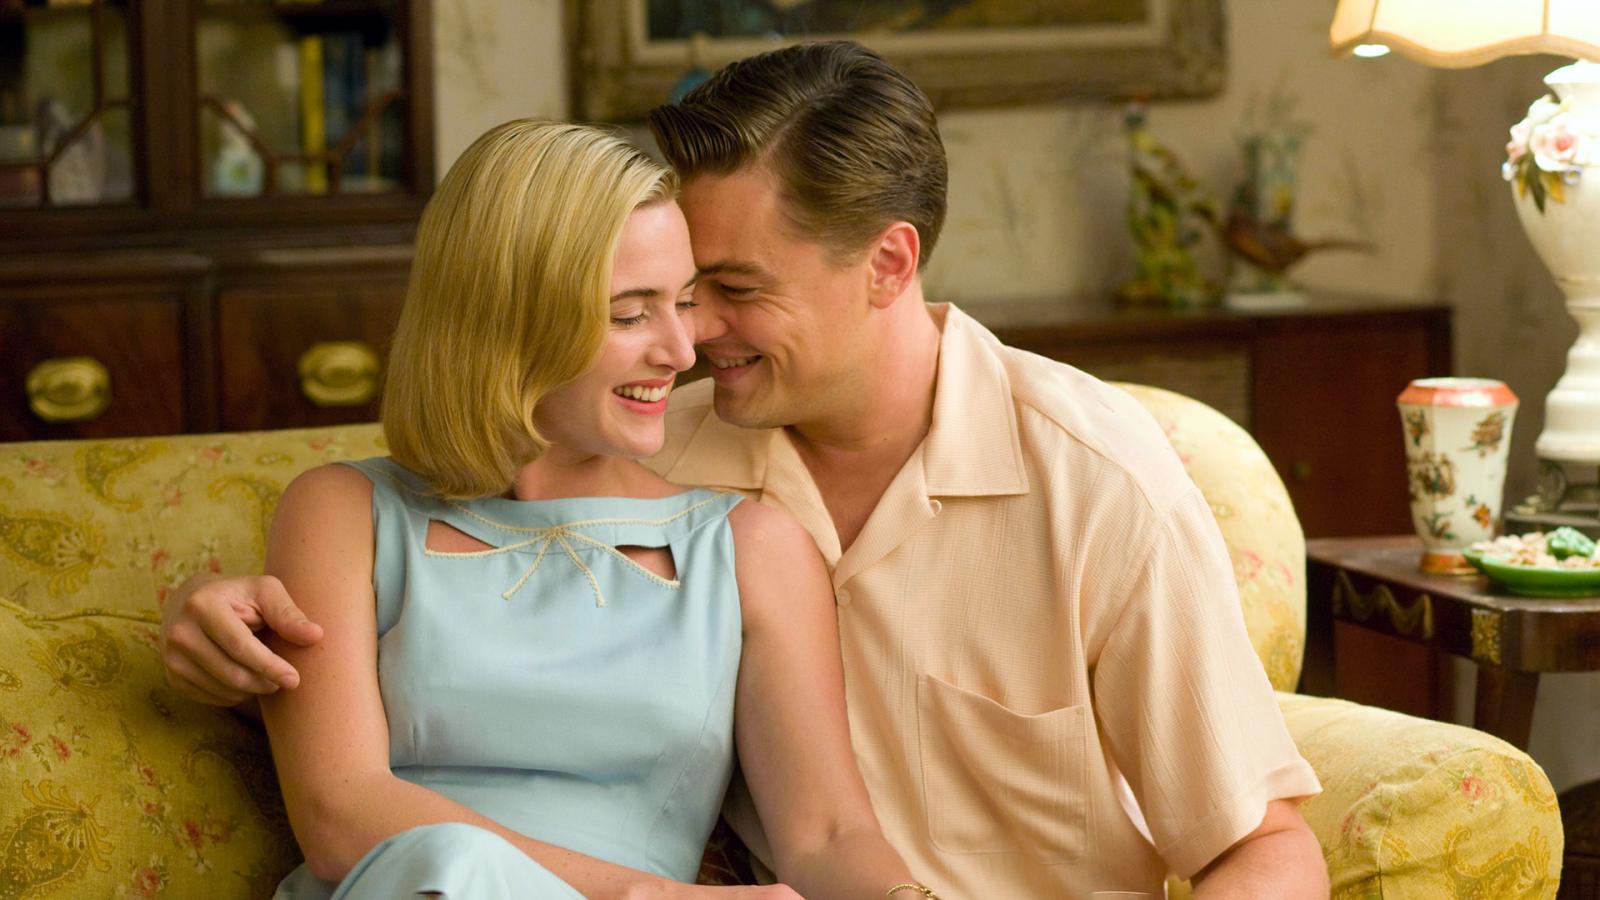 10 Romance Films with Heartbreaking Endings Prove Love Doesn't Always Win - image 10